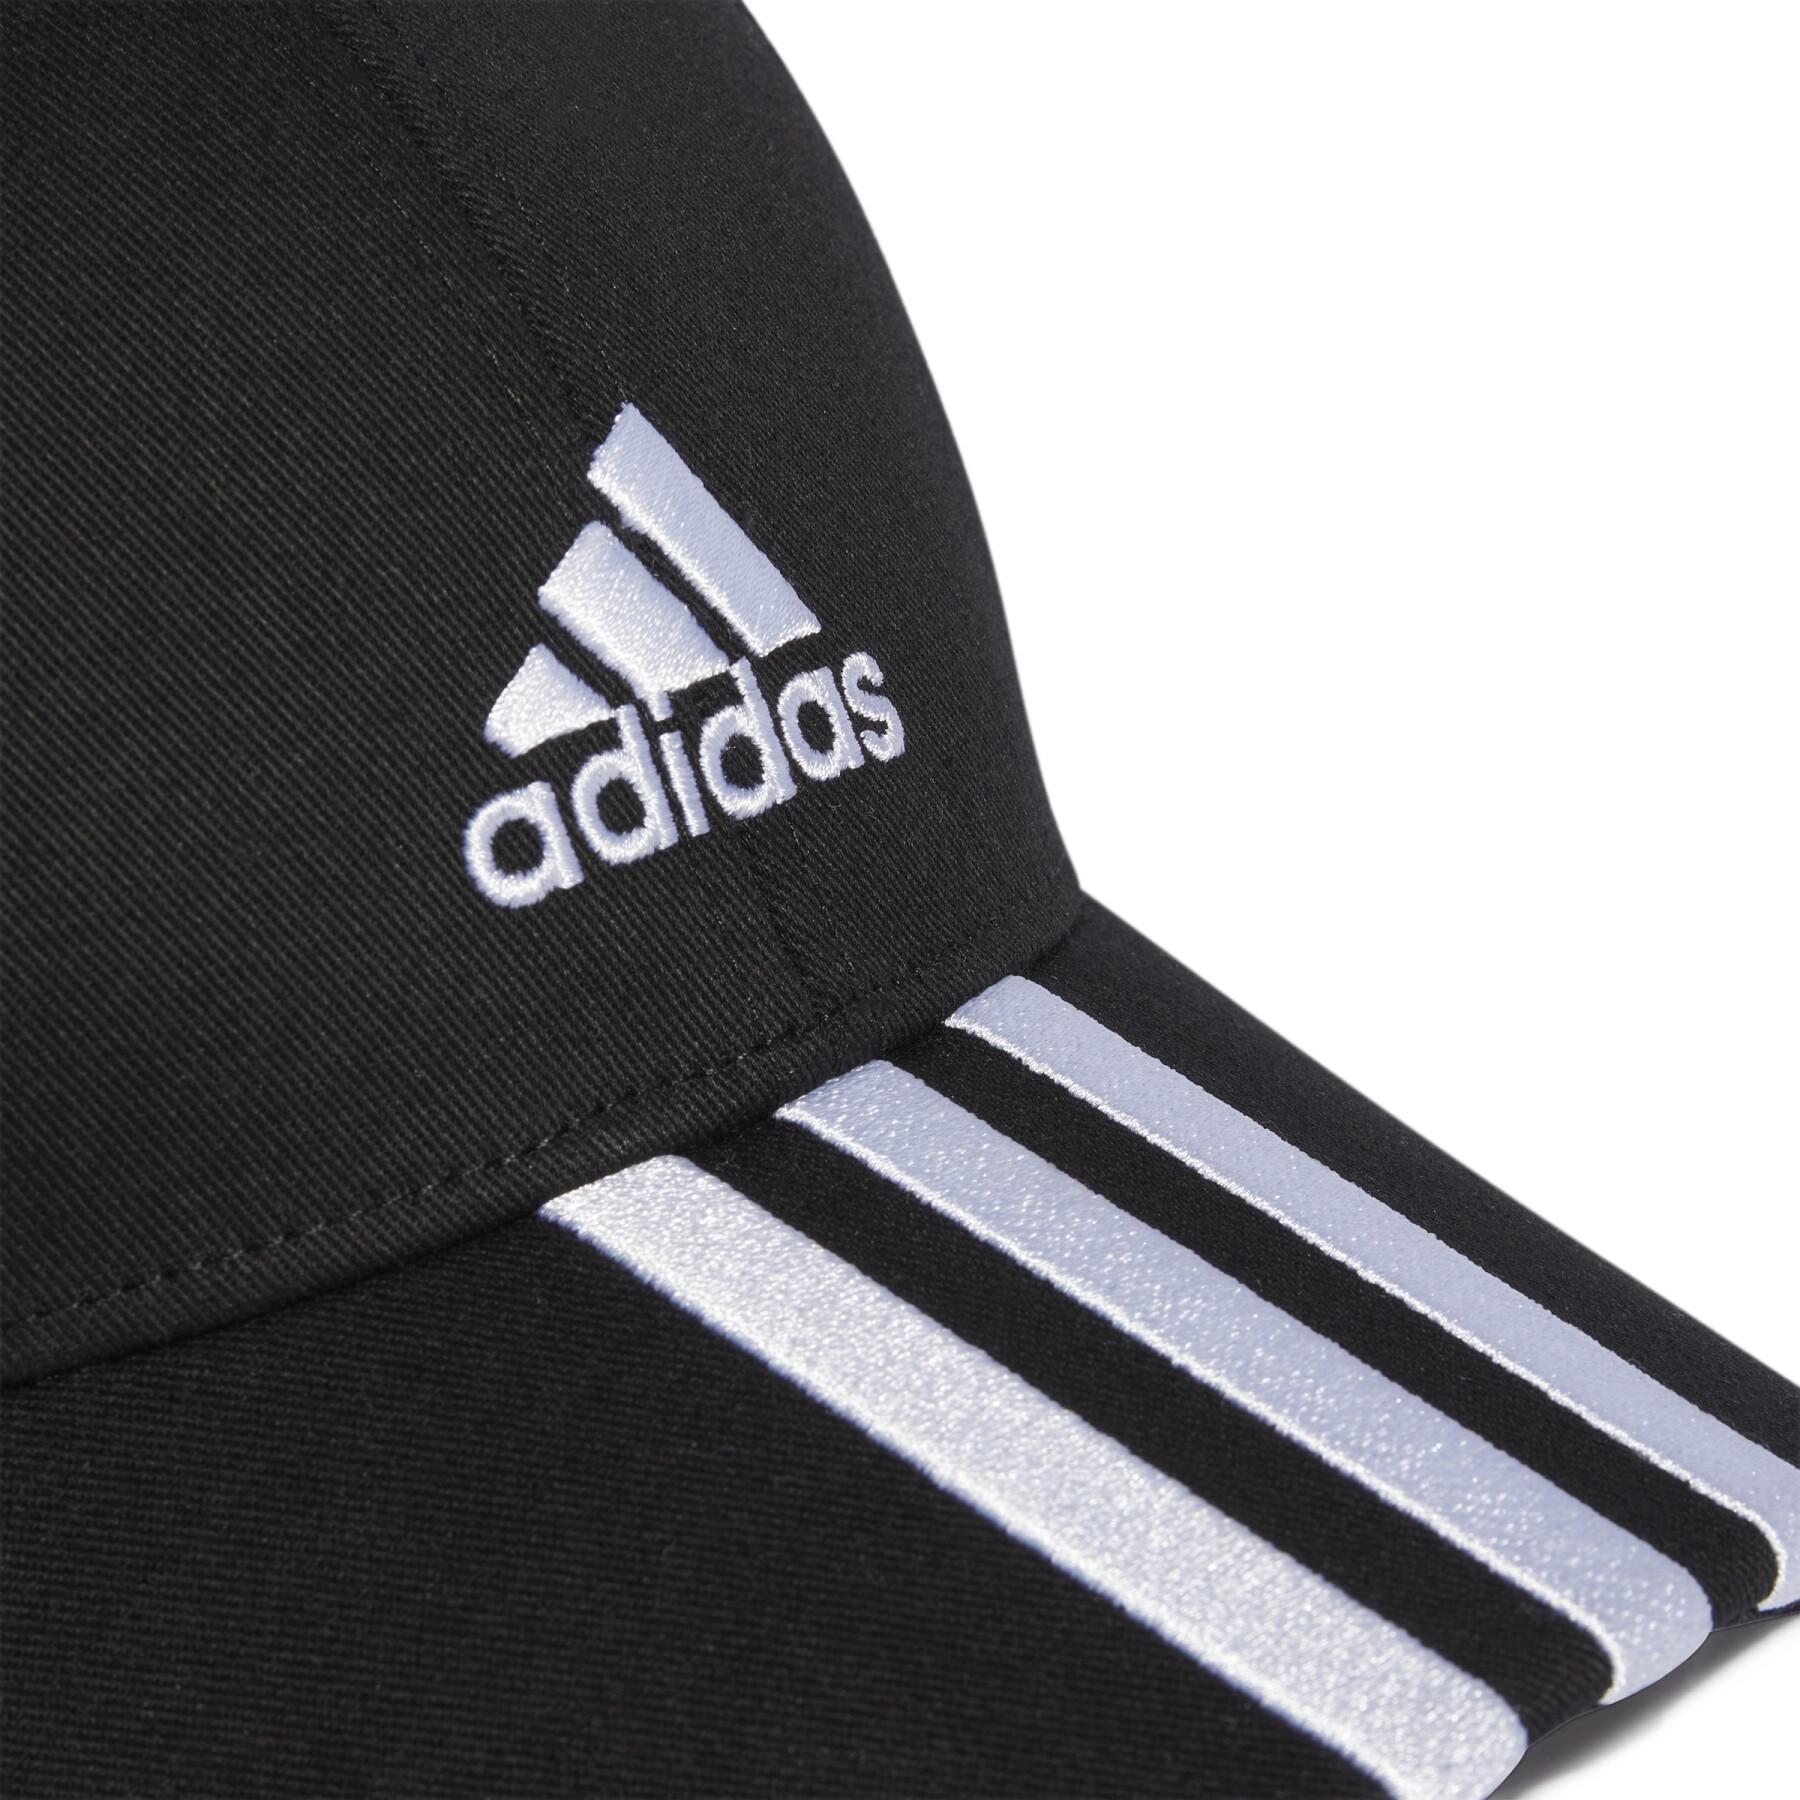 Cappellino in cotone con visiera adidas 3-Stripes